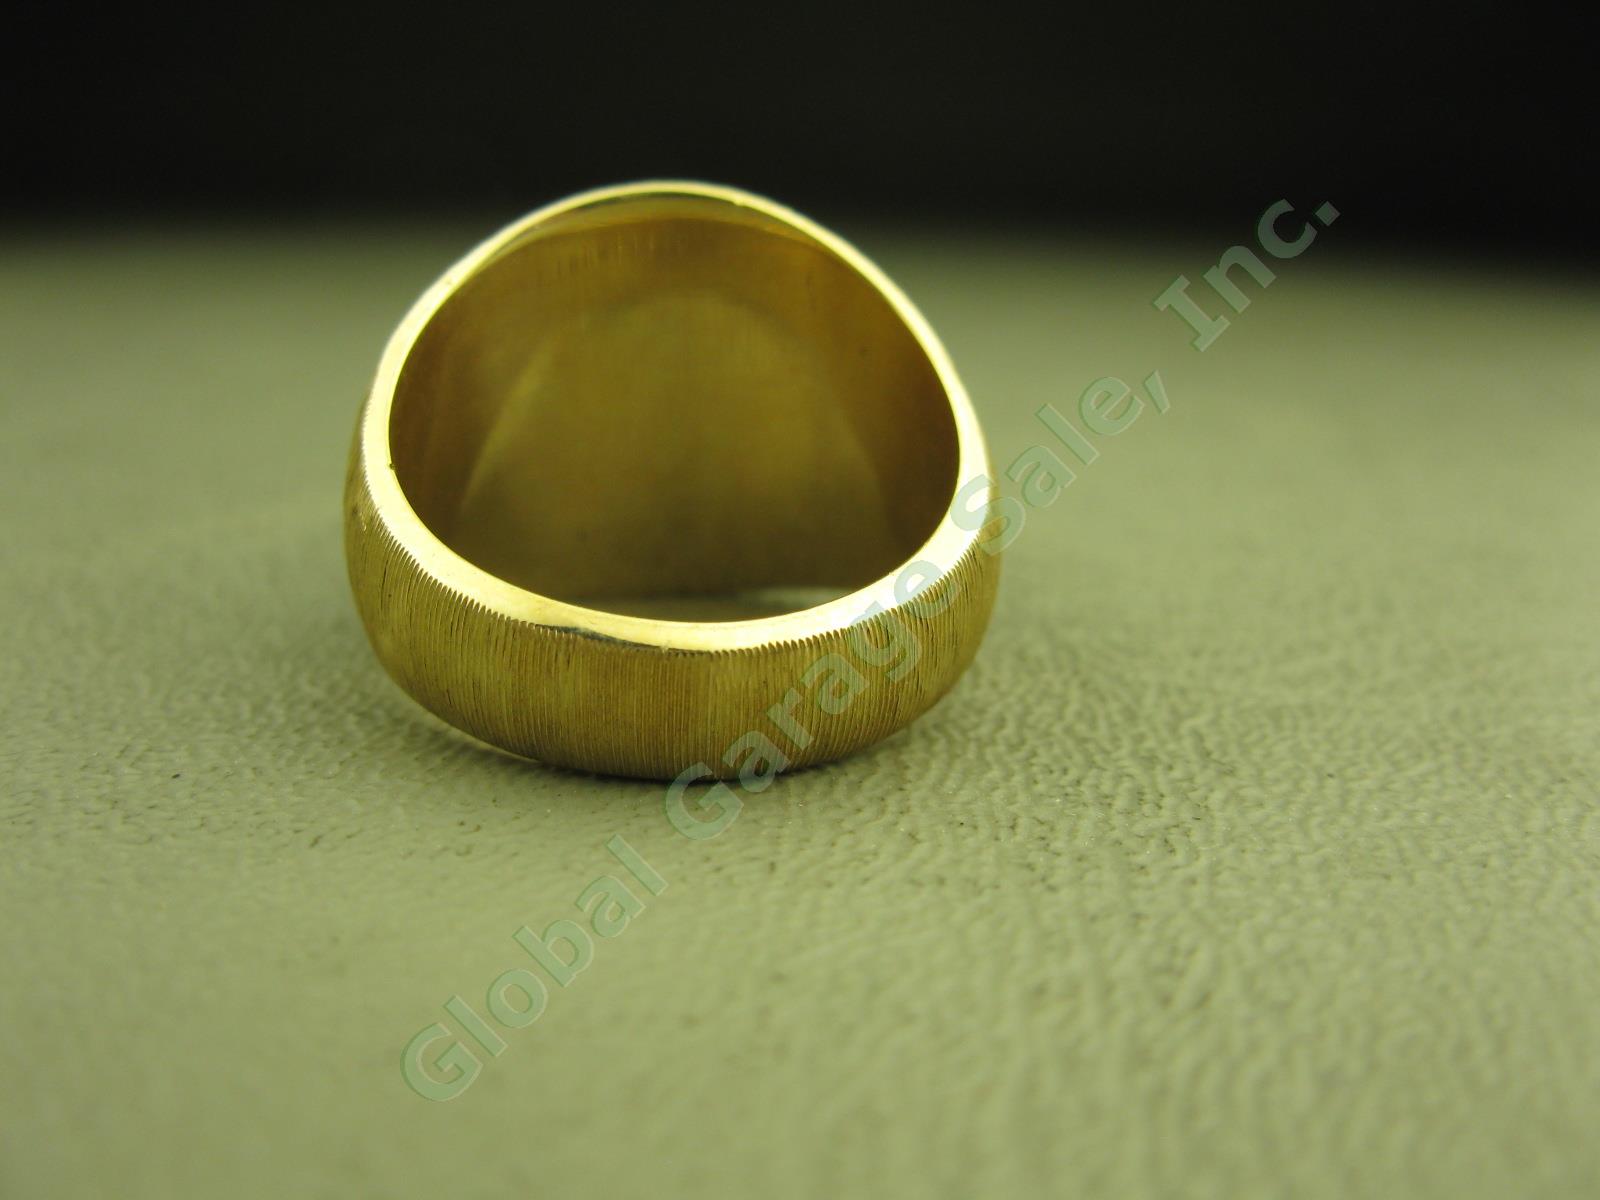 Snap-On Tools Dealer Sales Award 10K Gold Ring W/3 Diamonds 20.5 Gram Size 10.75 3